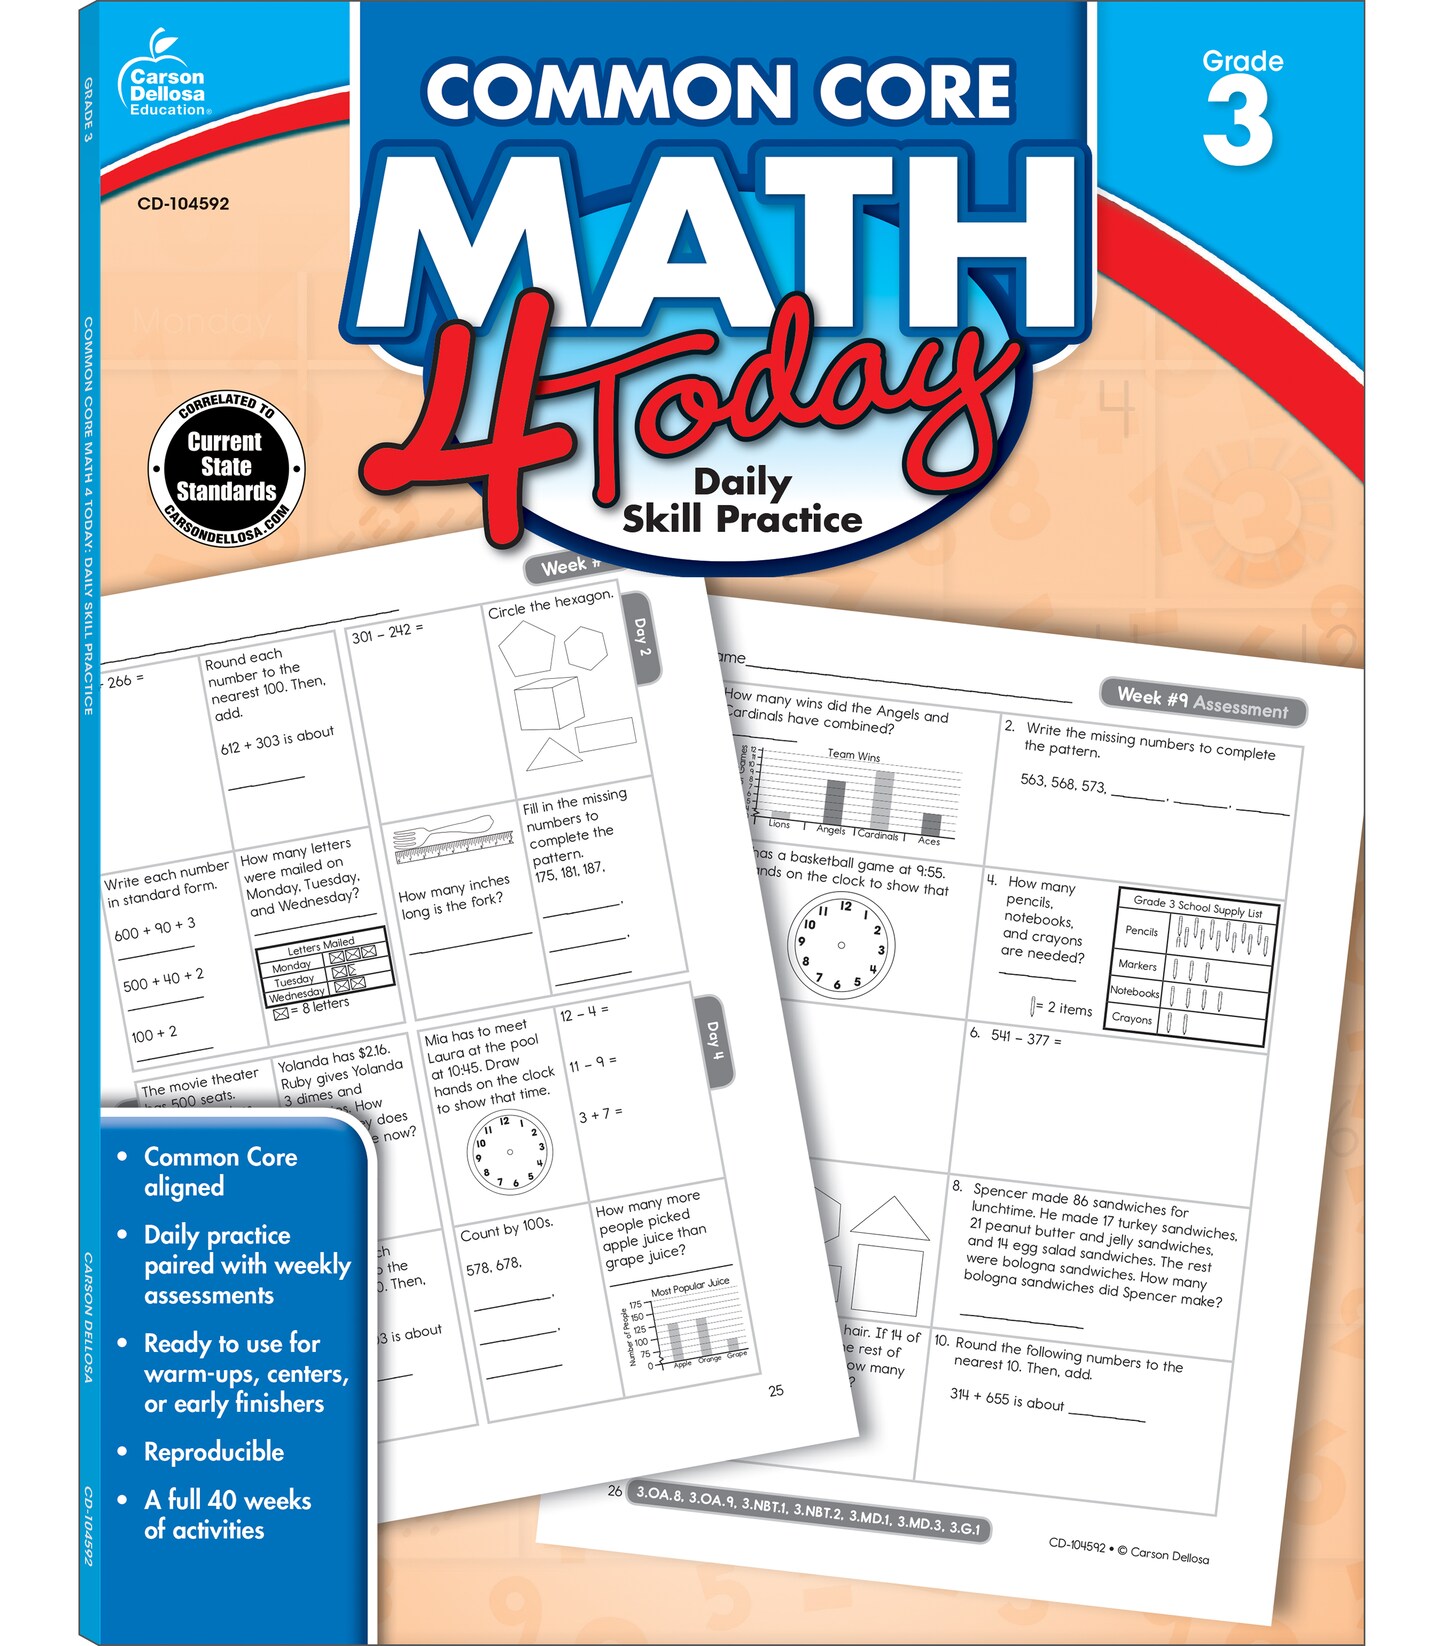 Carson Dellosa Common Core Math 4 Today Workbook&#x2014;Reproducible 3rd Grade Math Workbook, Place Value, Geometry, Algebra Practice, Classroom or Homeschool Curriculum (96 pgs)